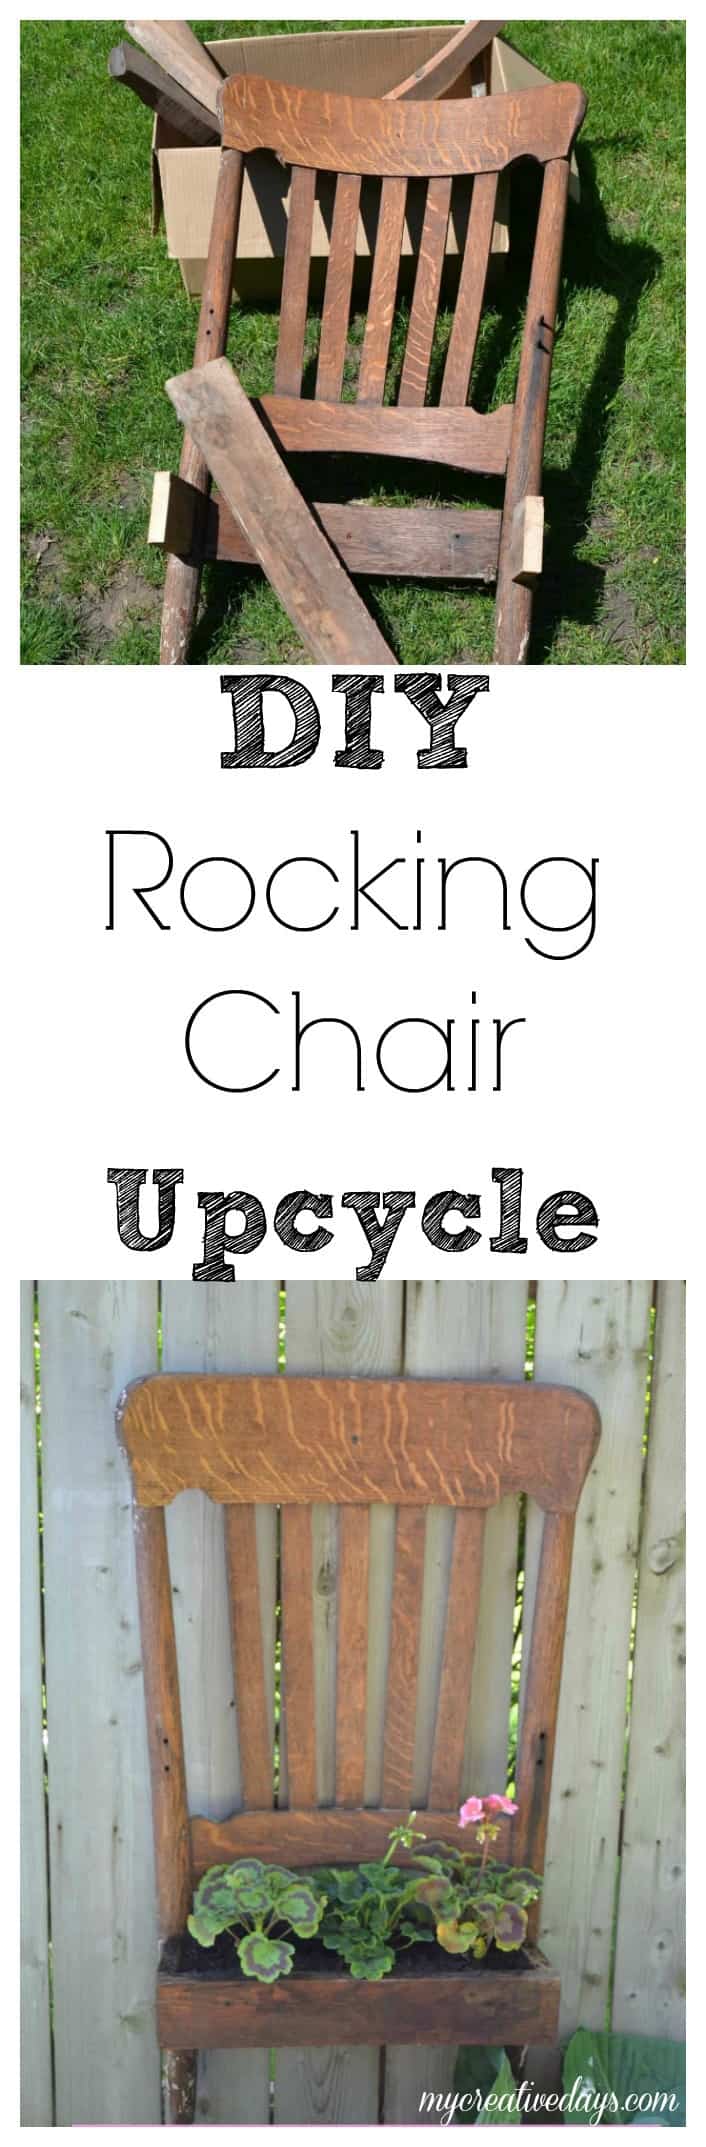 DIY Rocking Chair Upcycle Tutorial - My Creative Days